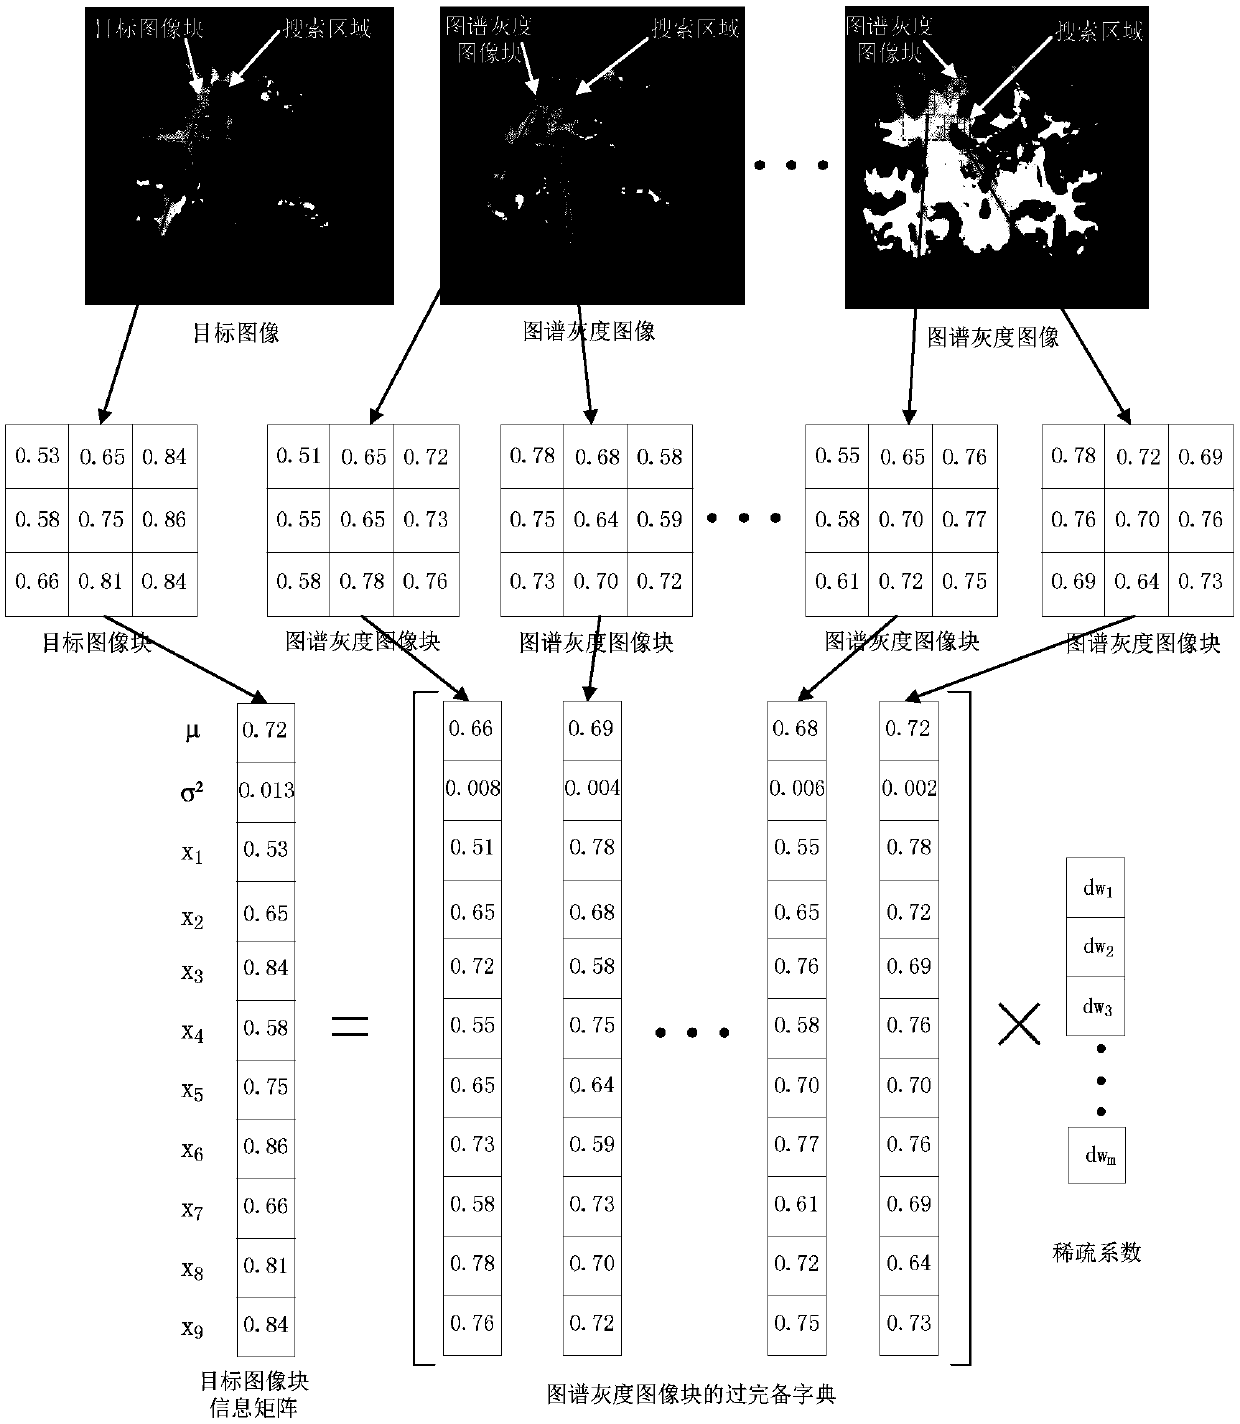 An automatic medical image segmentation method based on multi-atlas label fusion